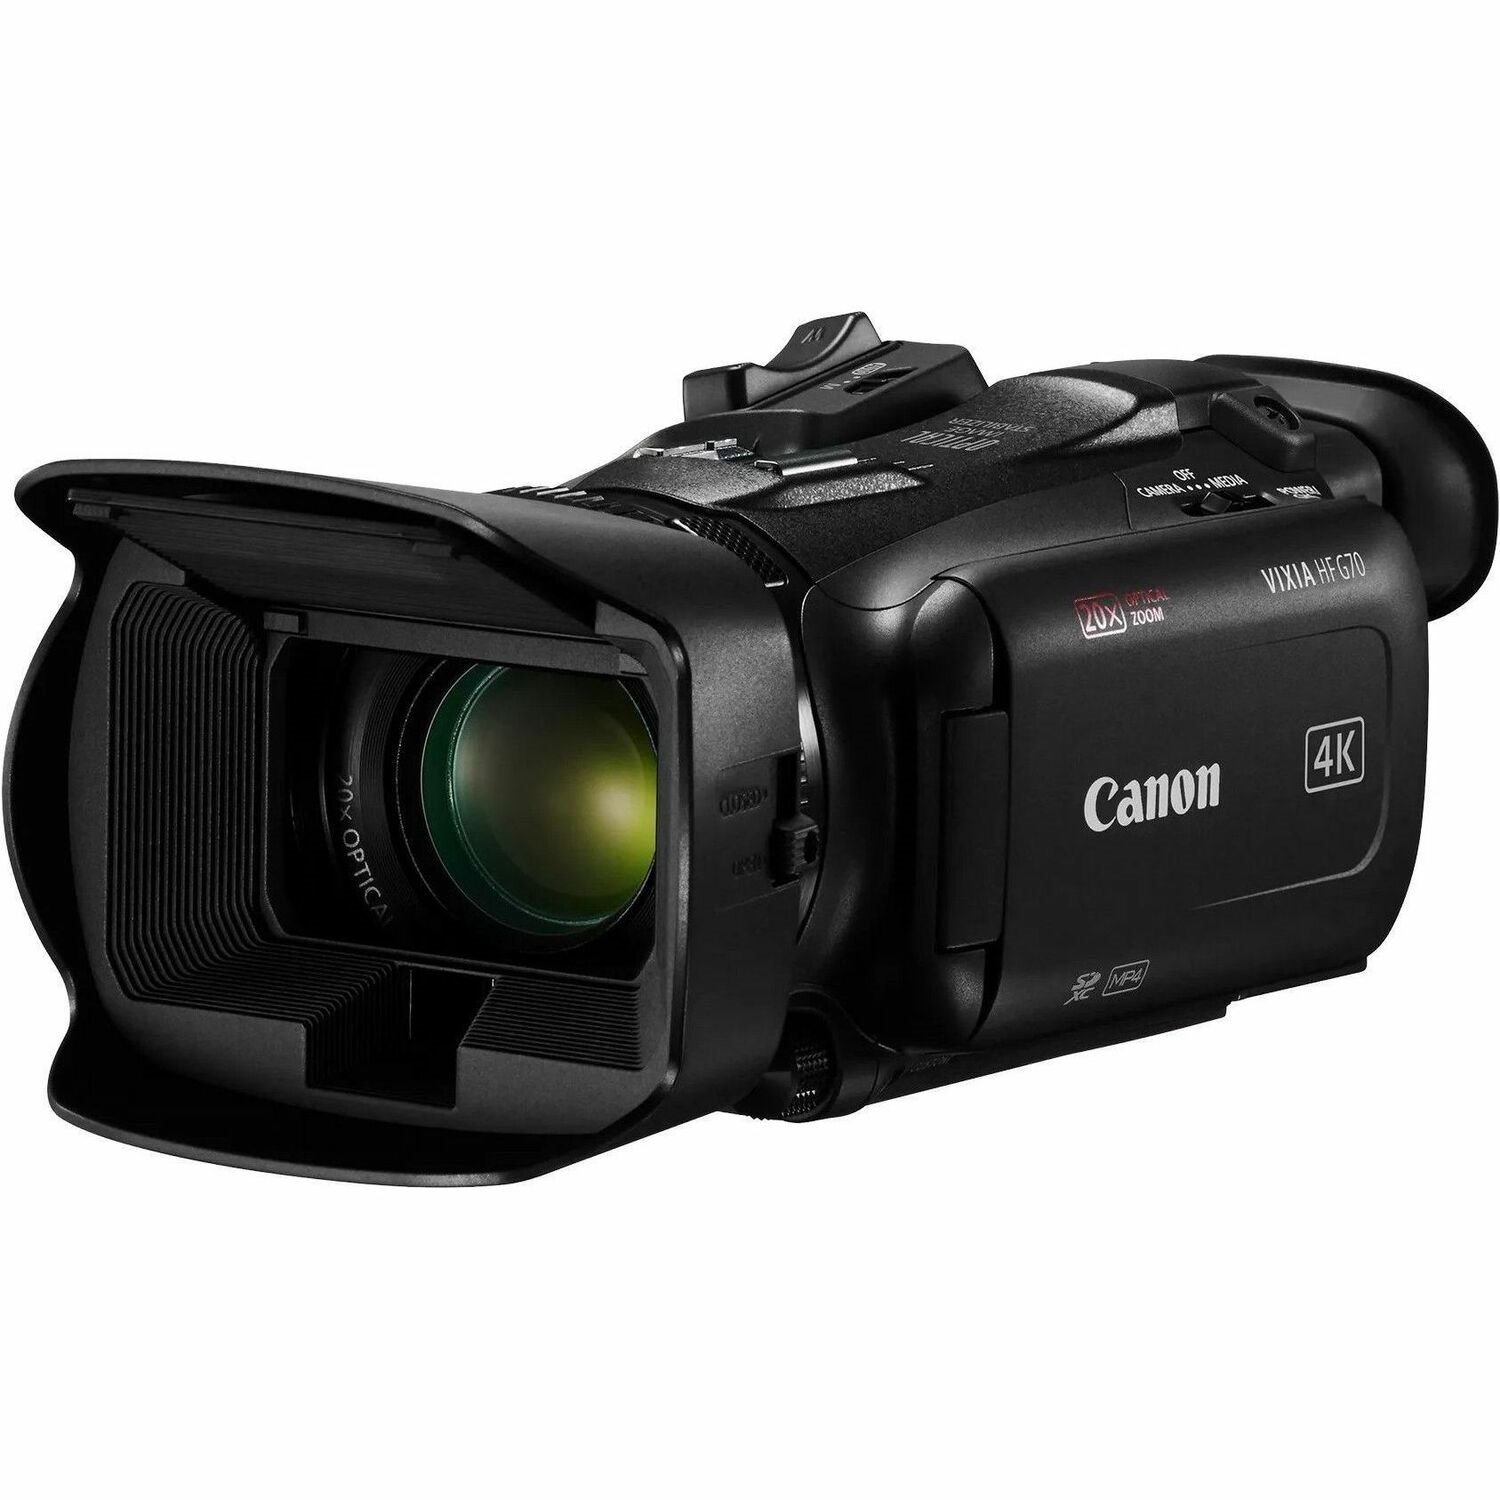 Canon VIXIA HF G70 Digital Camcorder - 3.5" LCD Touchscreen - 1/2.3" CMOS - 4K, Full HD